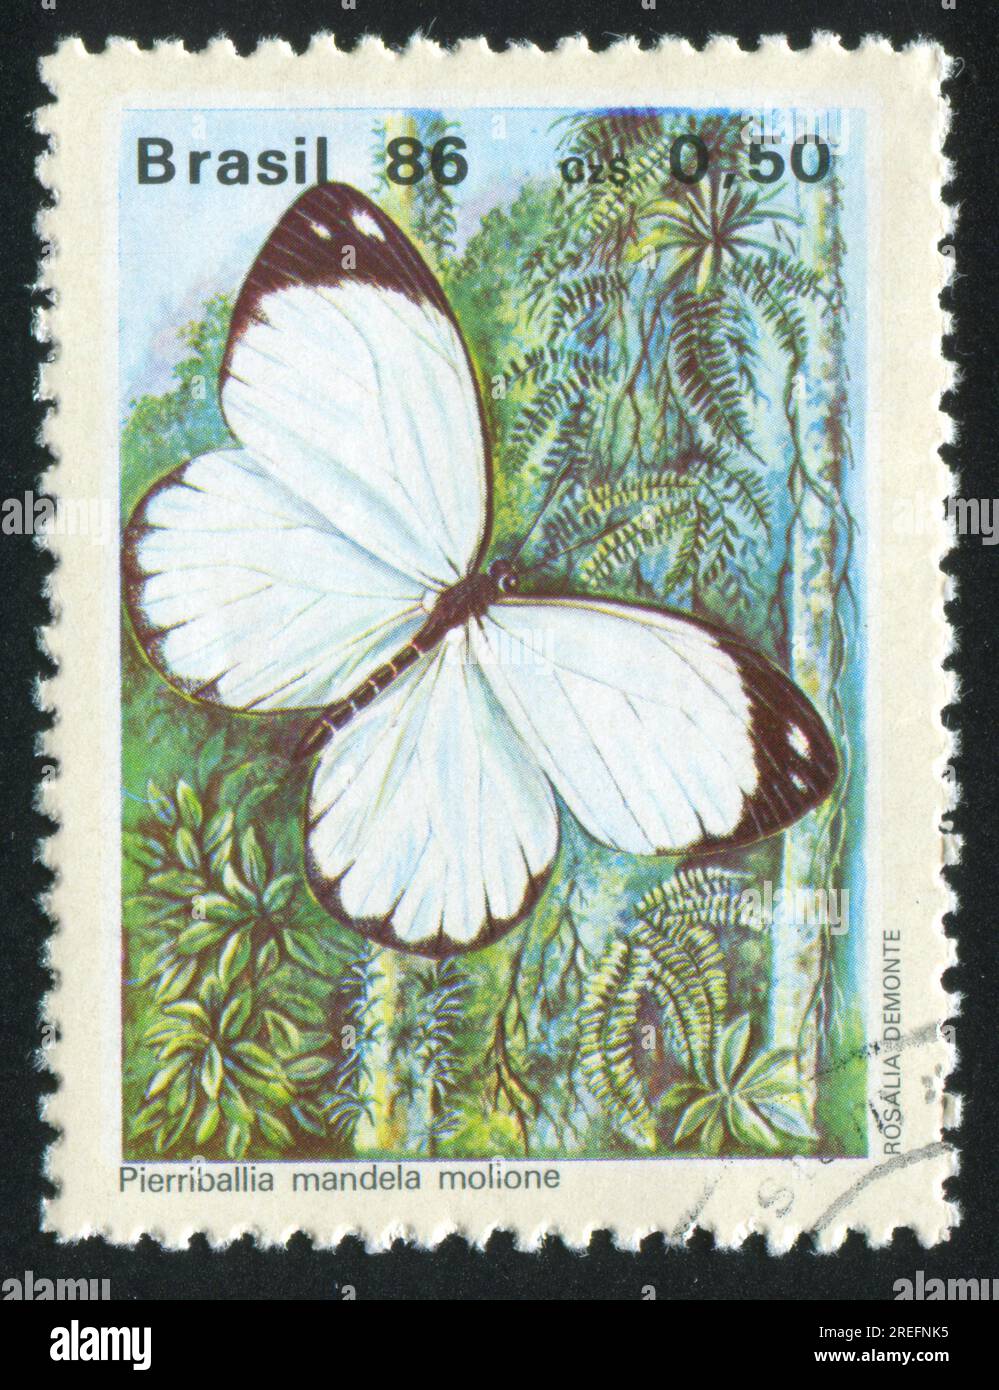 BRAZIL - CIRCA 1986: stamp printed by Brazil, shows butterfly Pierriballia mandel molione, circa 1986 Stock Photo